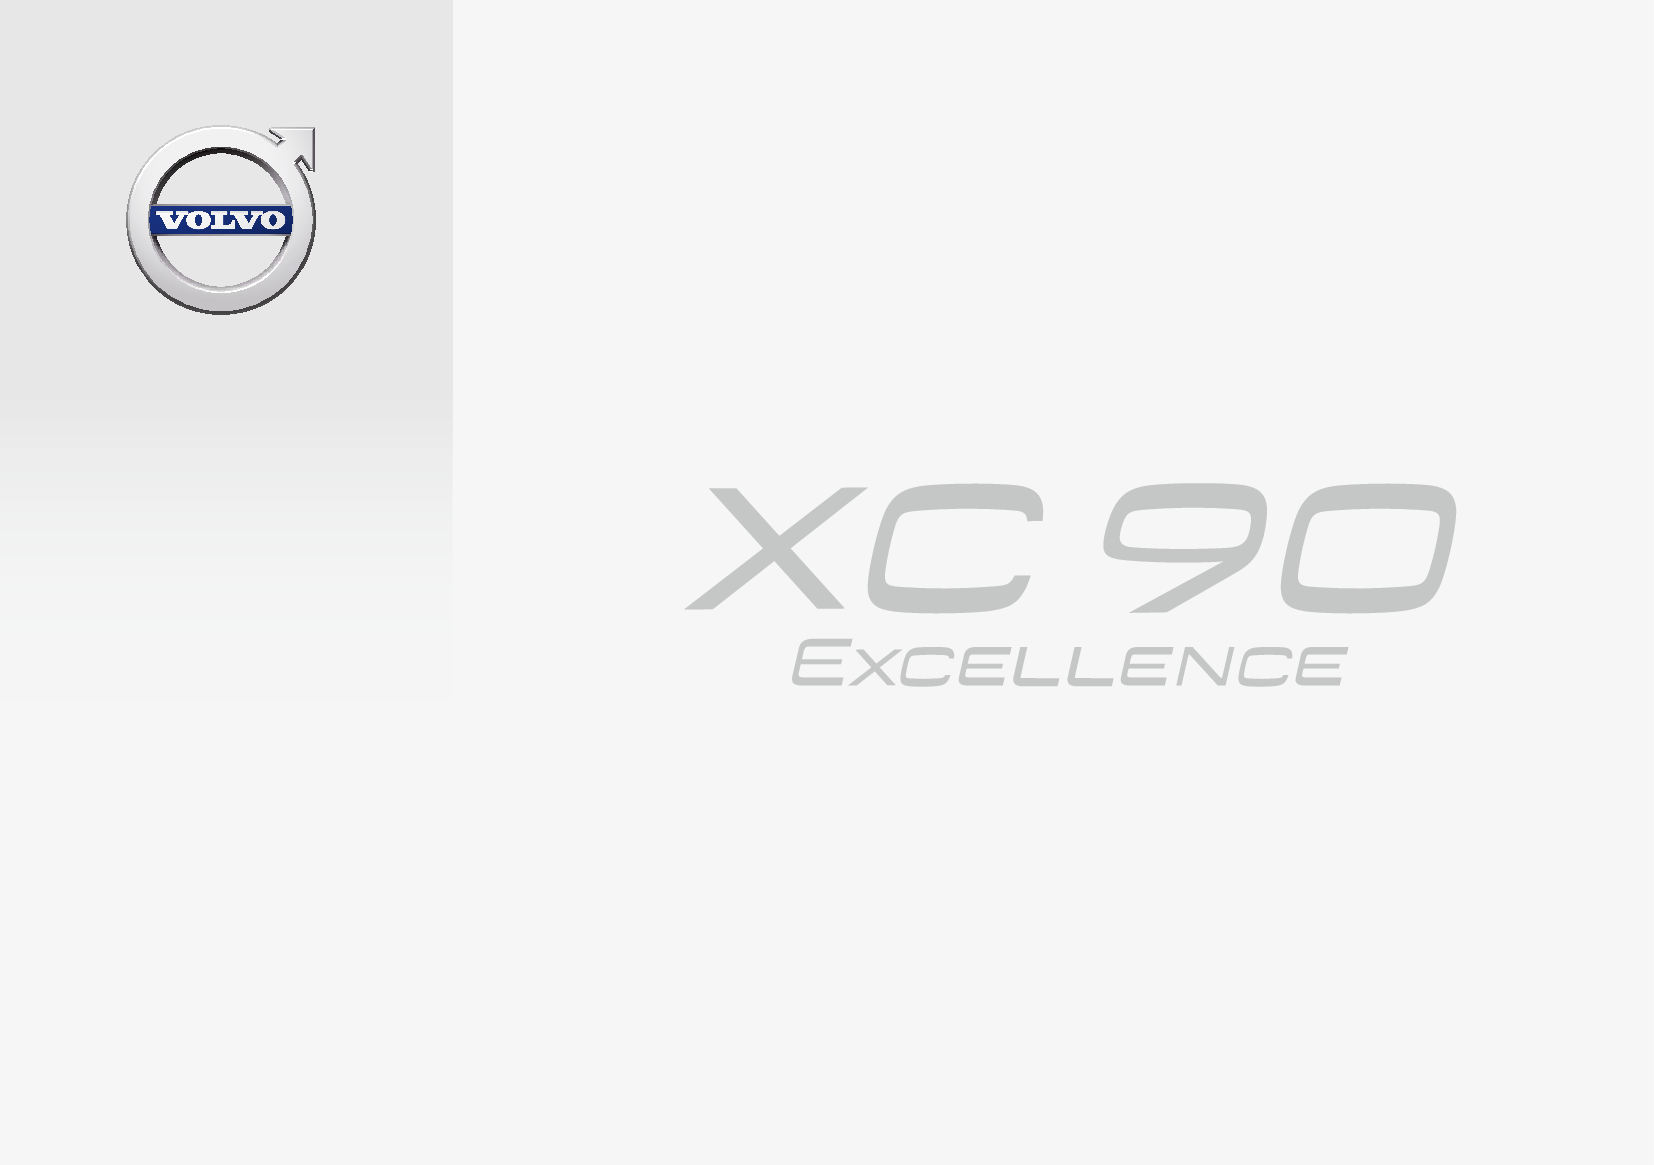 Volvo 2017 XC90 Excellence